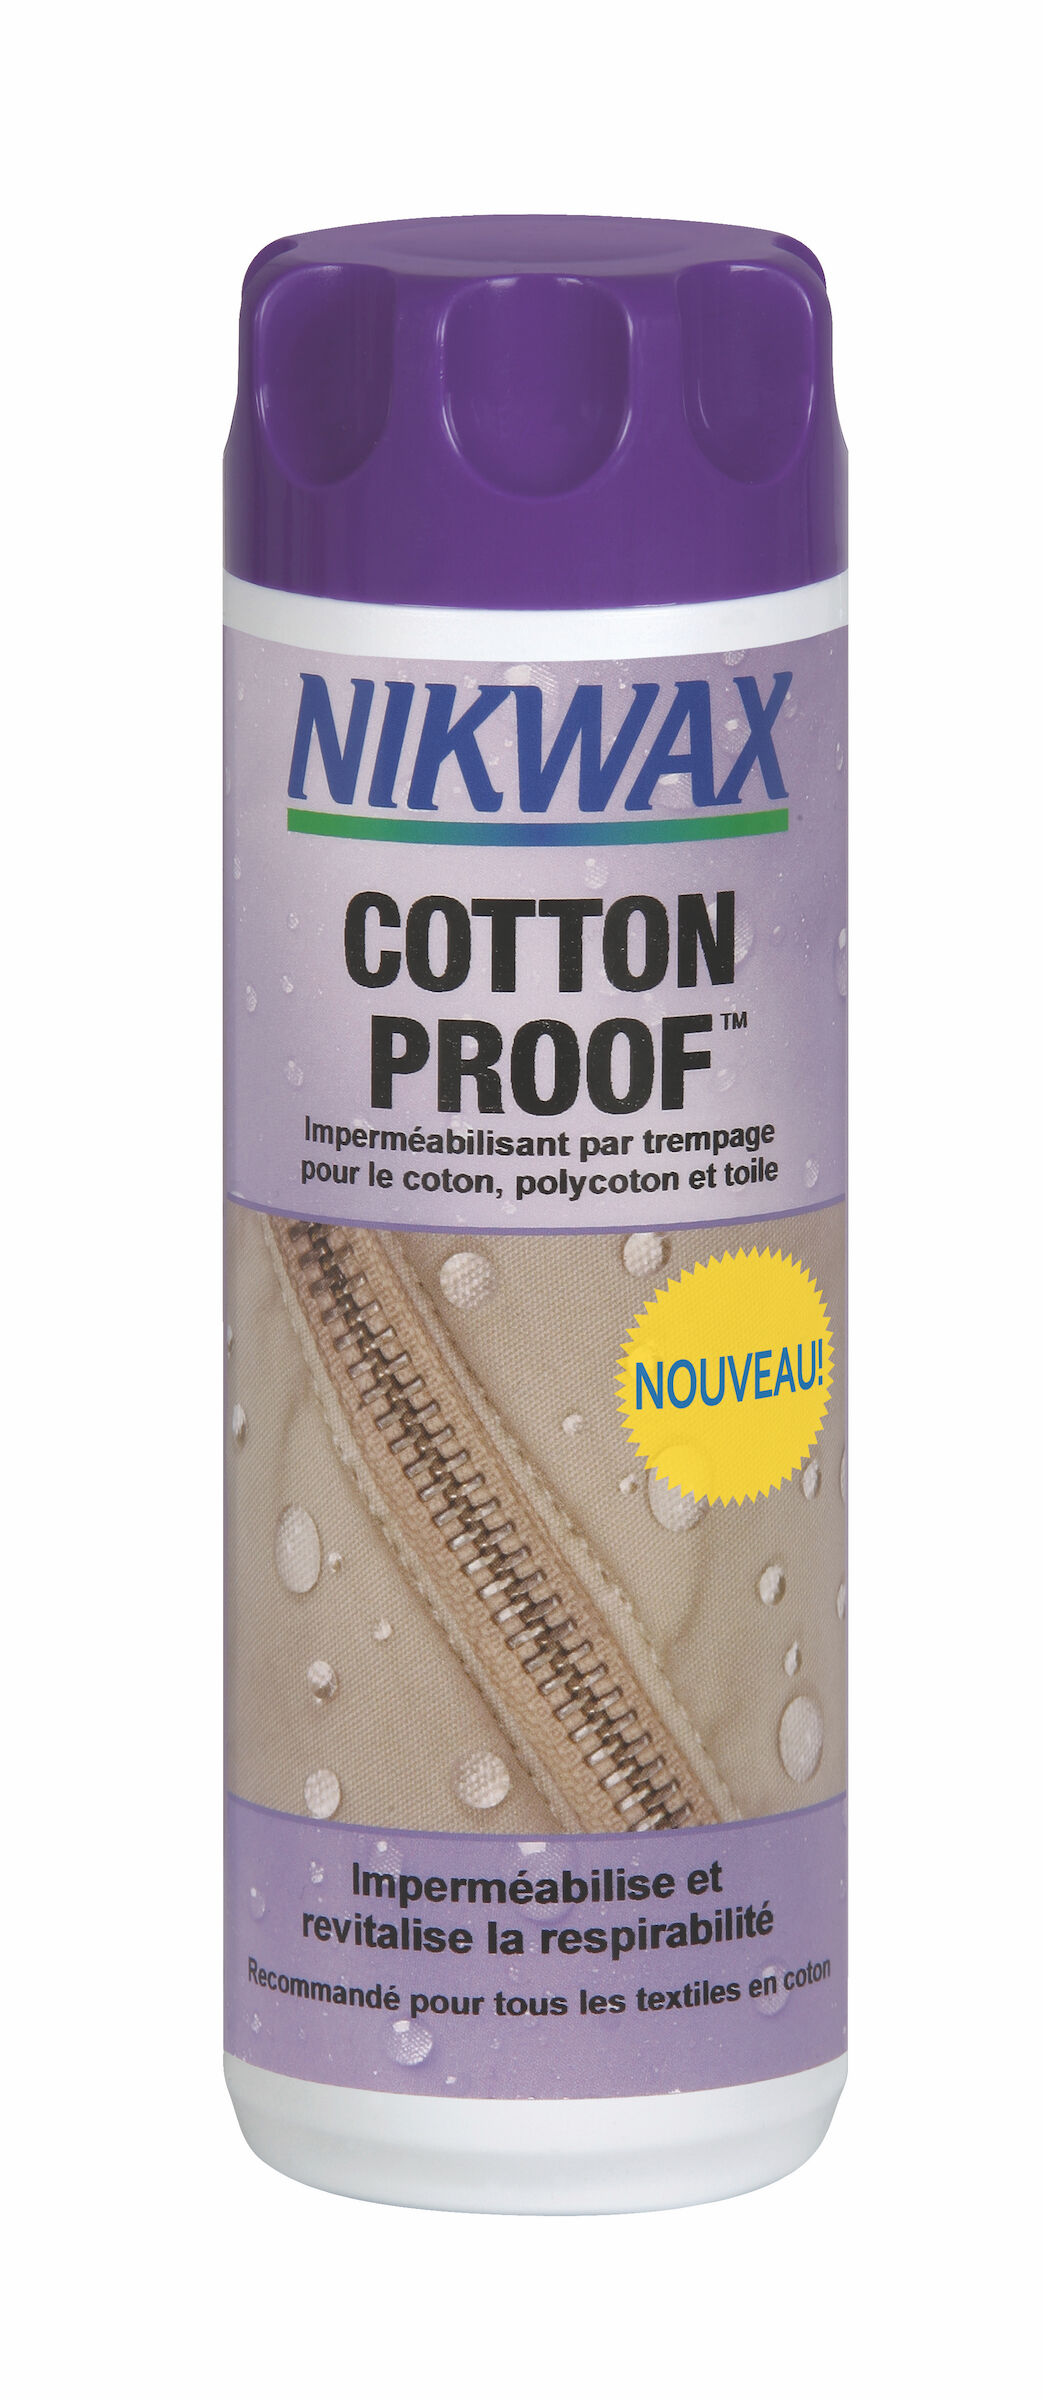 Nikwax - Cotton Proof - DWR treatment